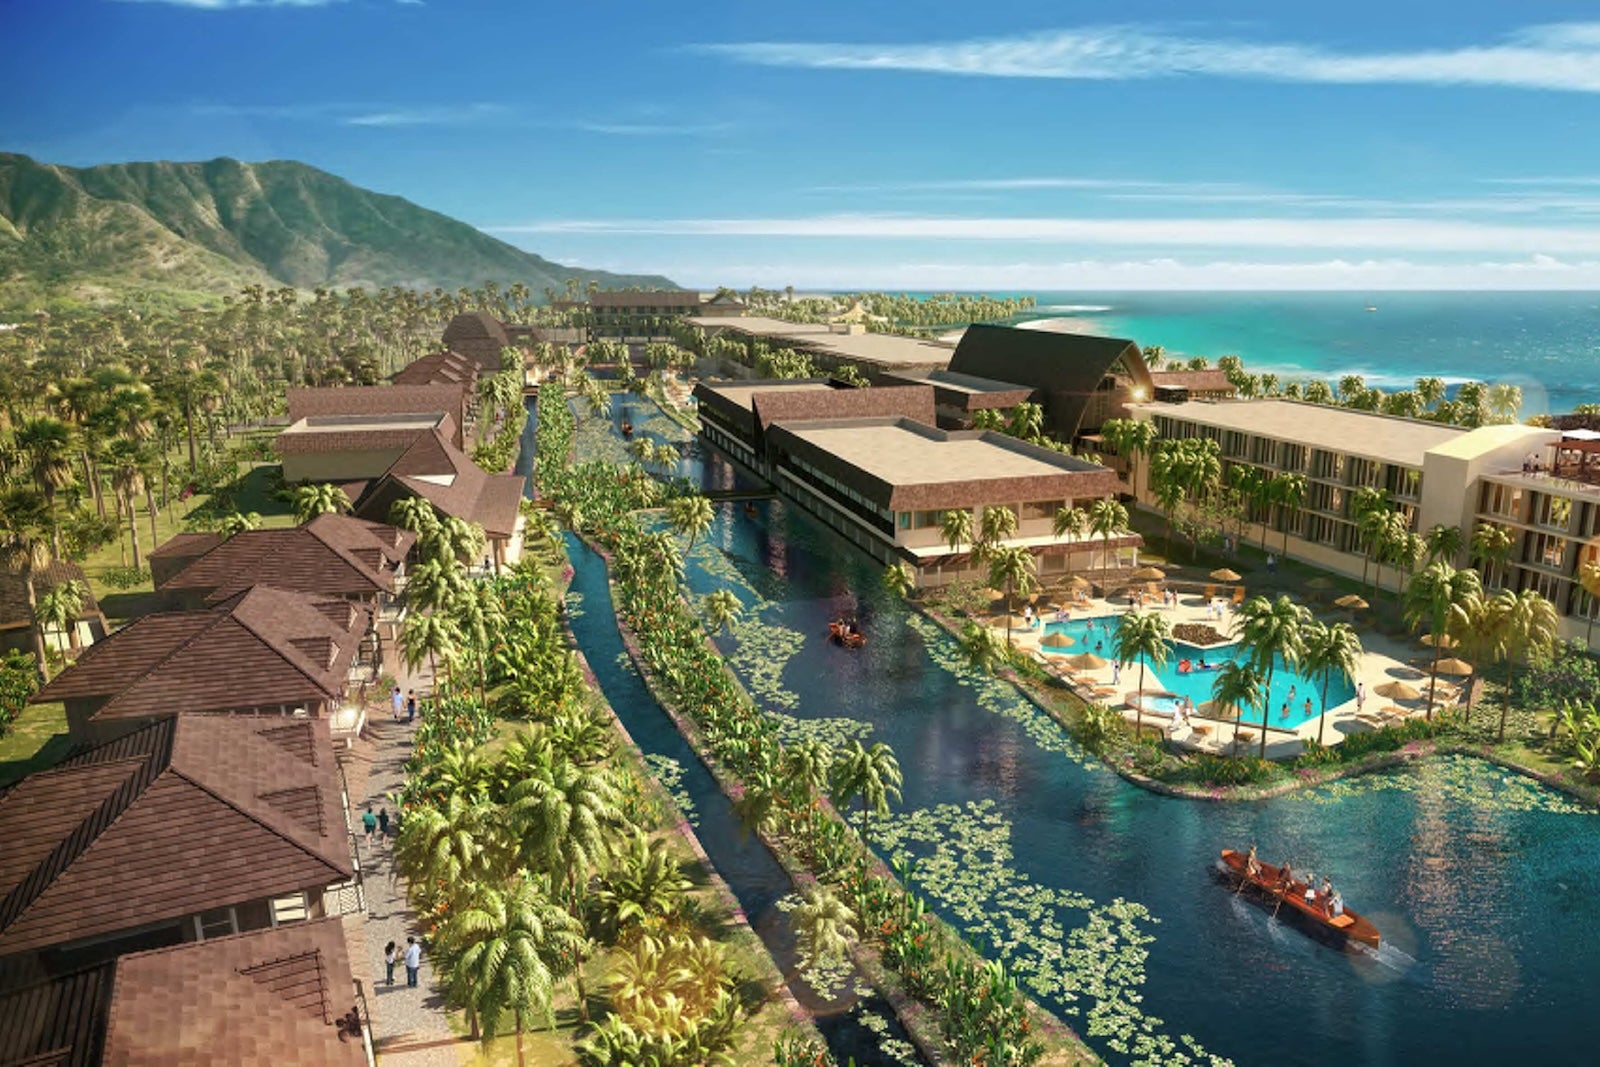 Kimpton is taking over a historic resort in Hawaii